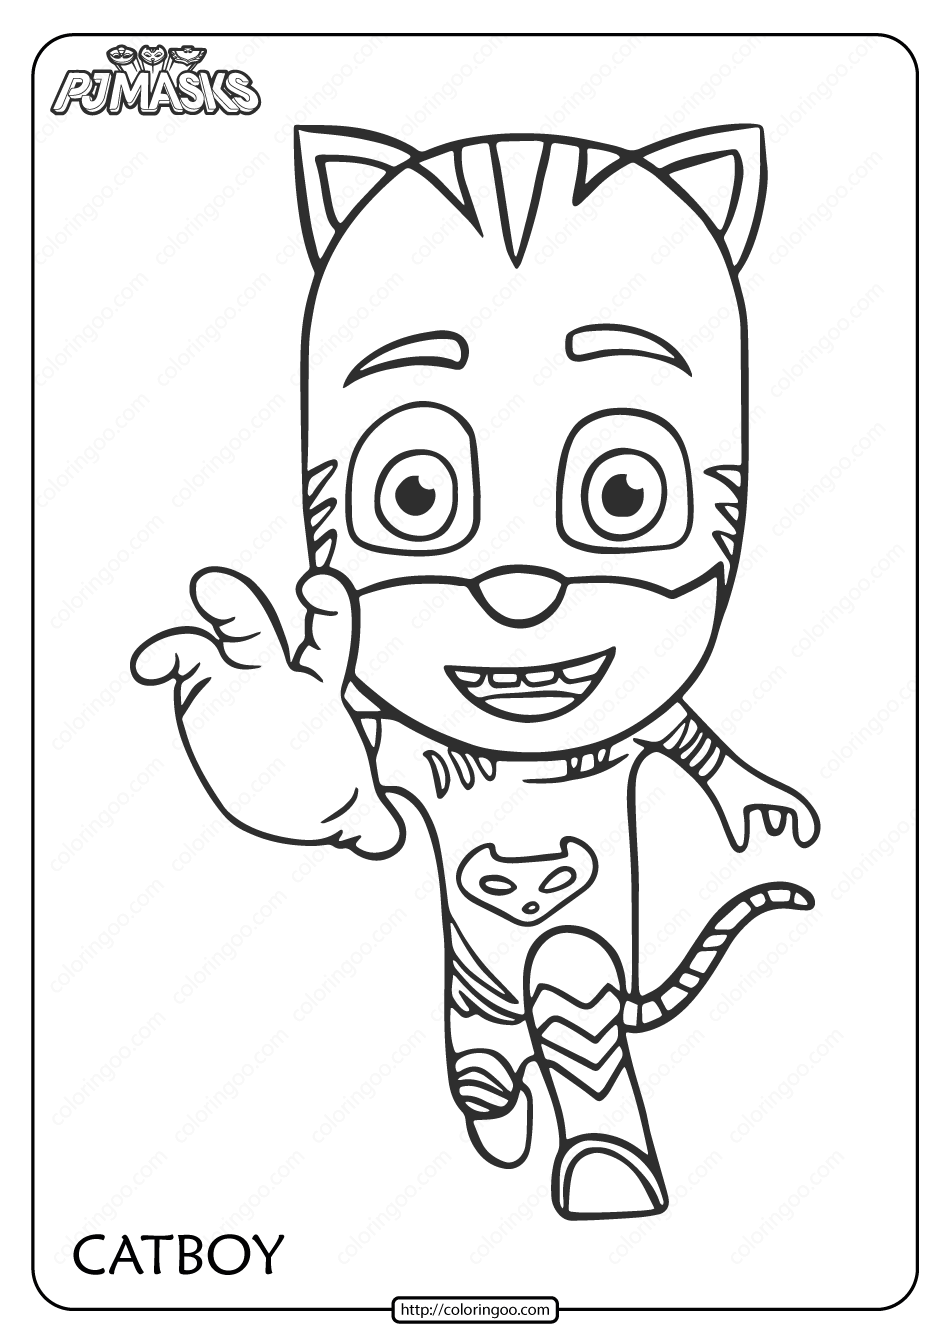 free printable pjmasks catboy pdf coloring page